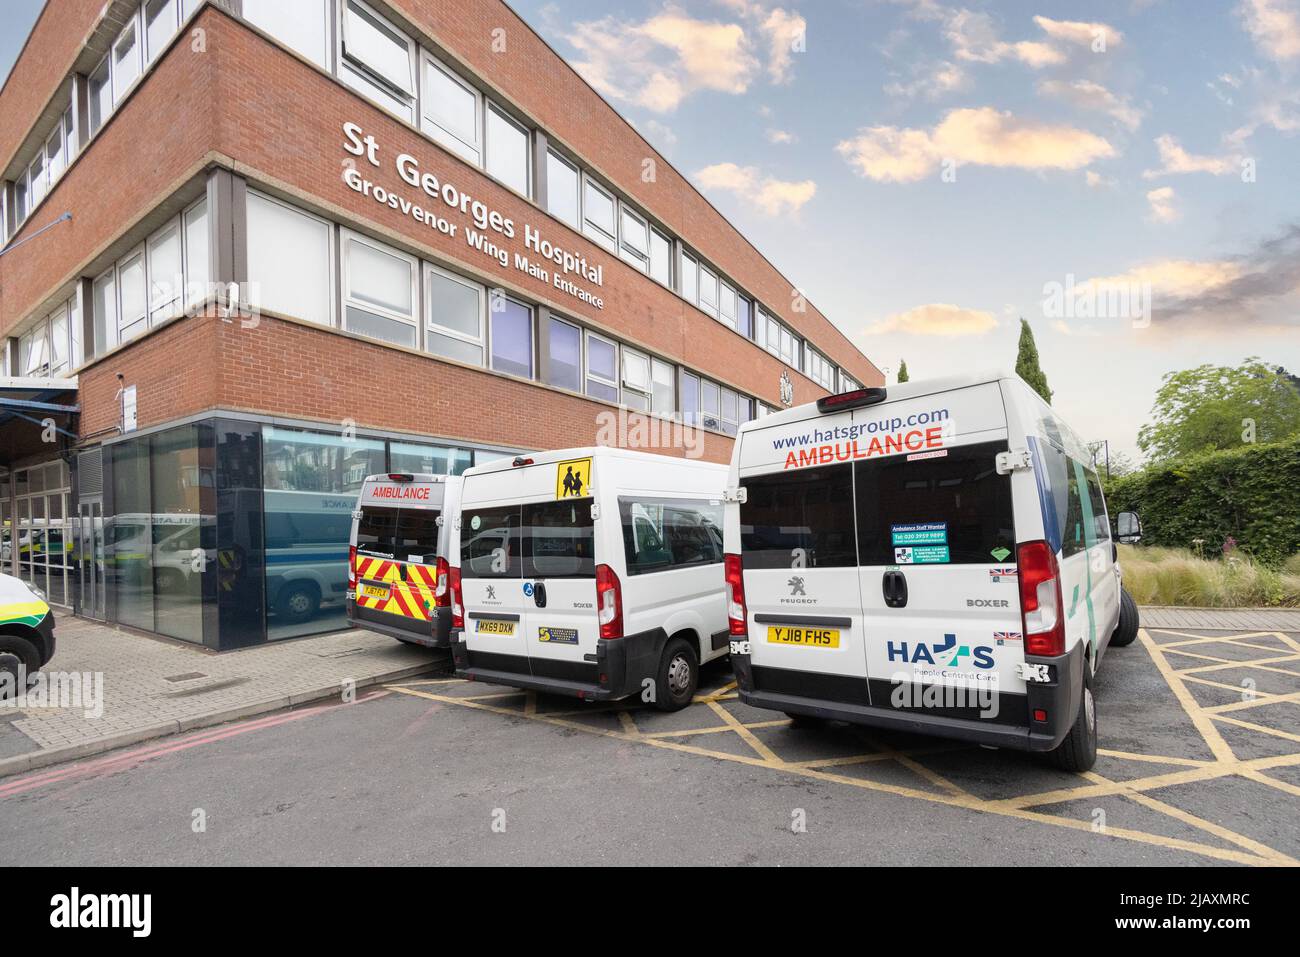 St Georges Hospital London UK - vue extérieure avec NHS ambulances, St Georges, London Teaching Hospital Medical School, Tooting London UK Banque D'Images